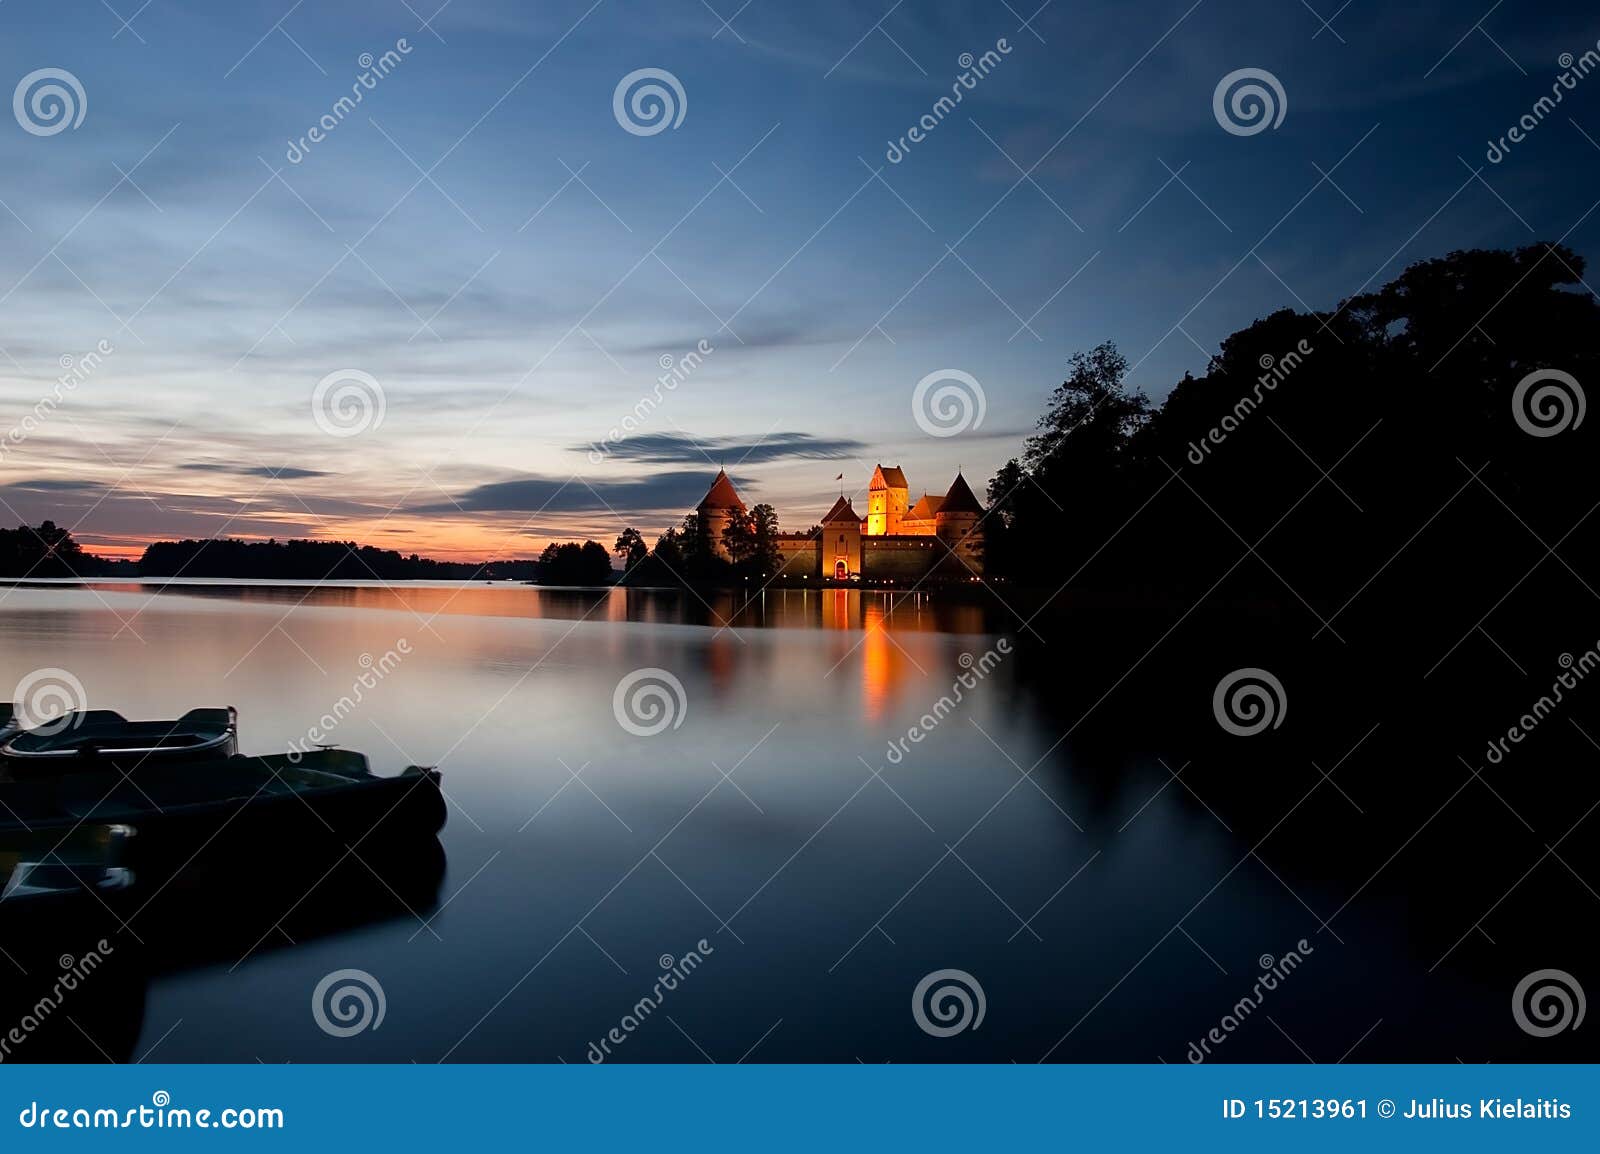 island castle at night, trakai, lithuania, vilnius